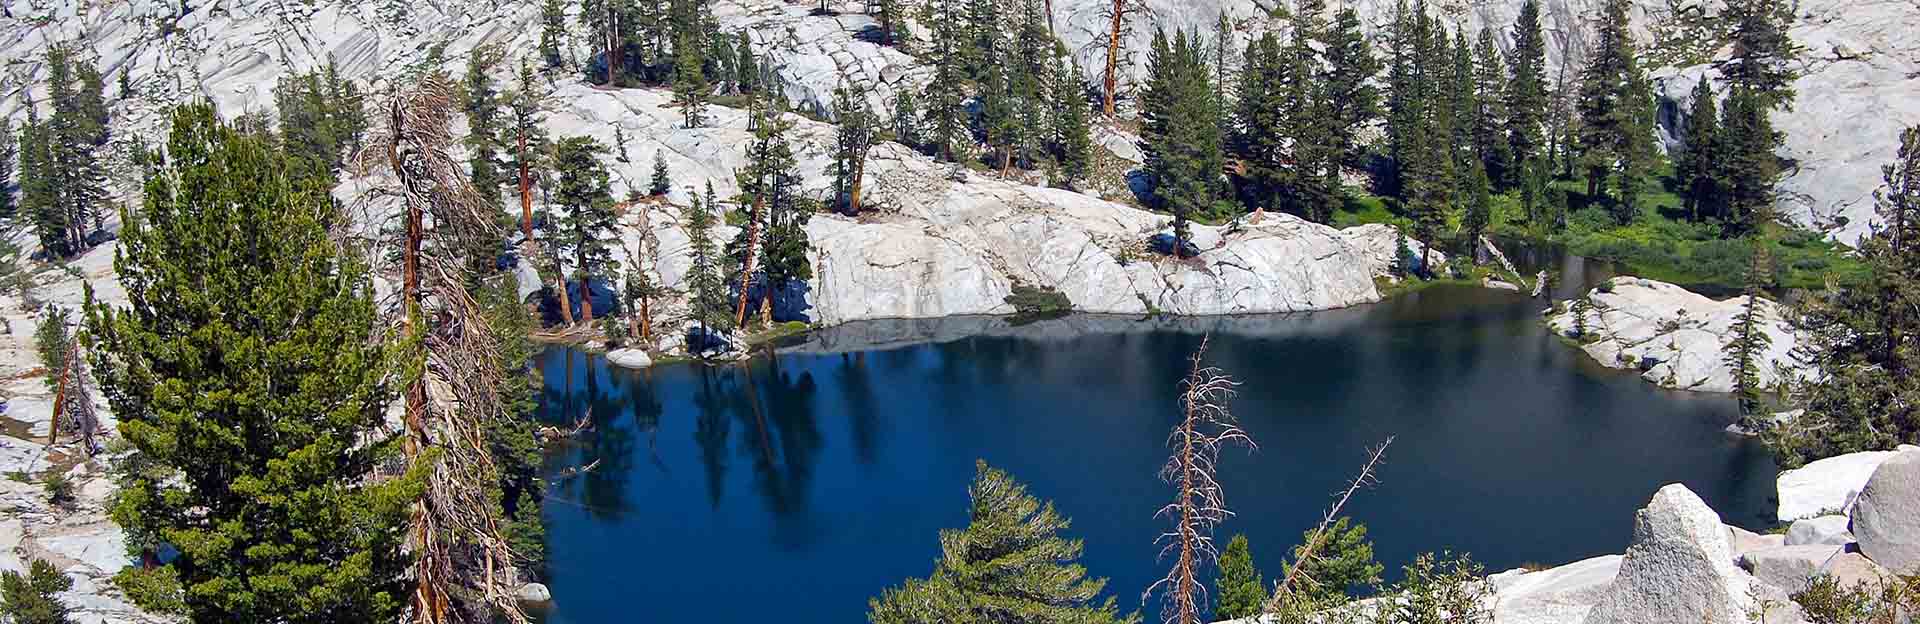 Emerald Lake, Sequoia National Park